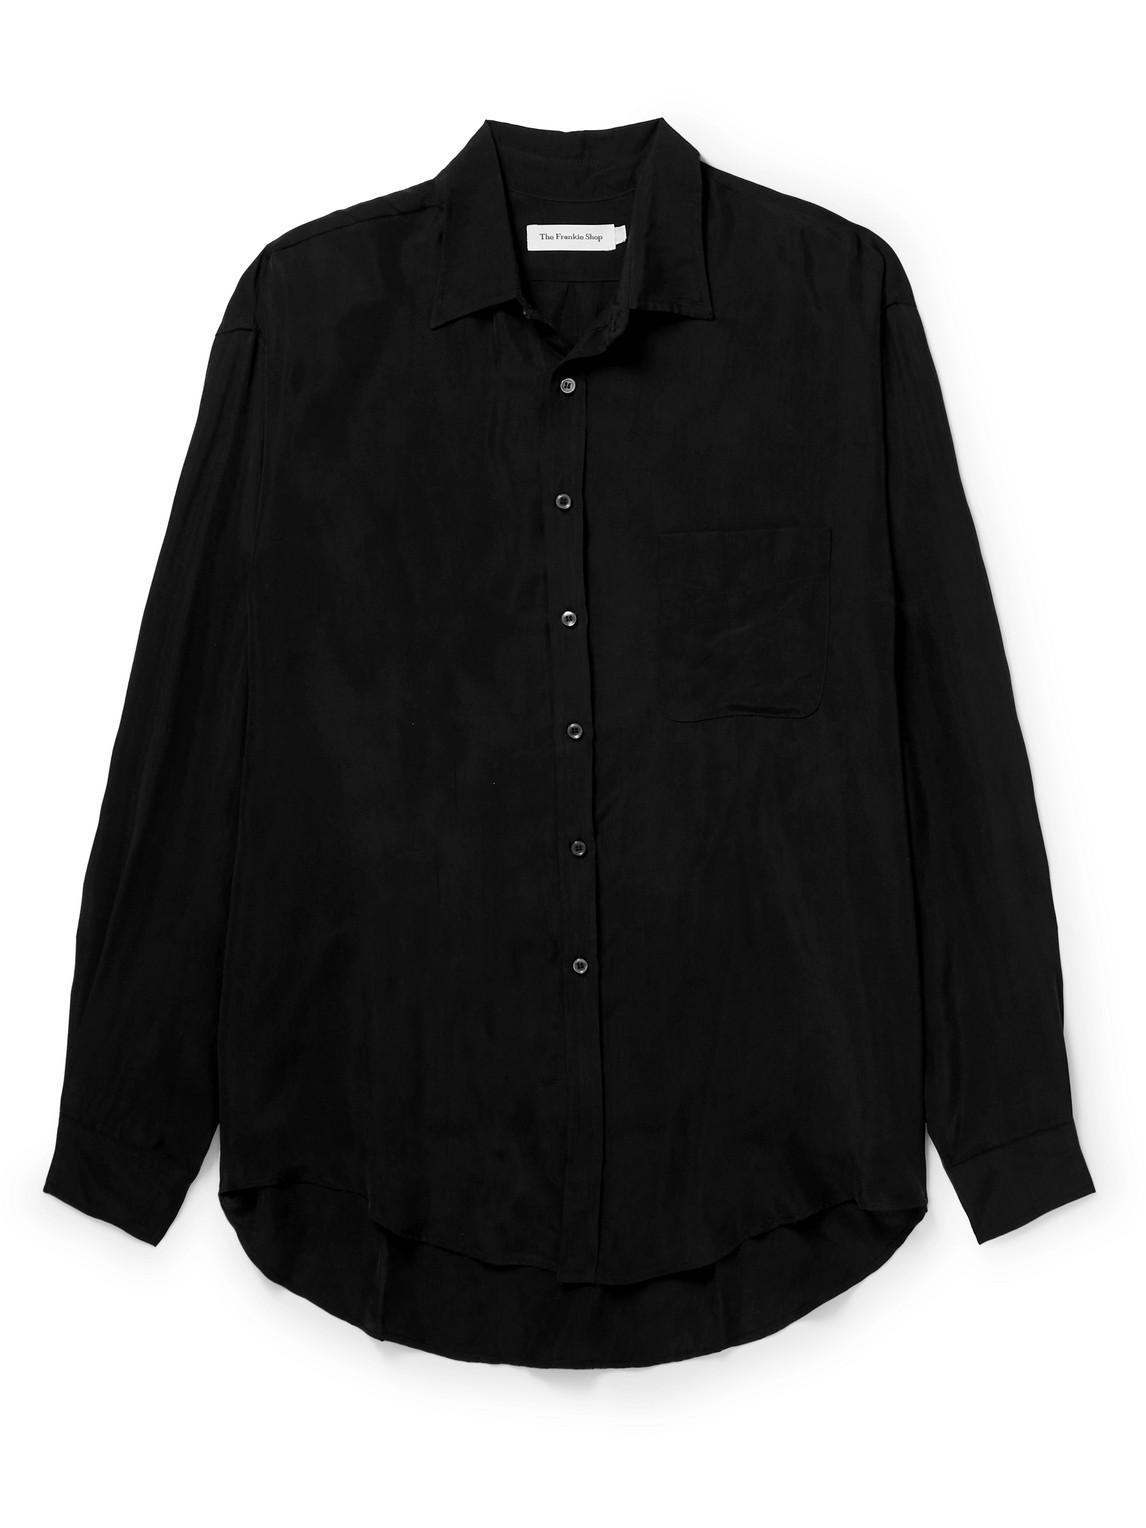 The Frankie Shop Leland Bemberg™ Shirt In Black